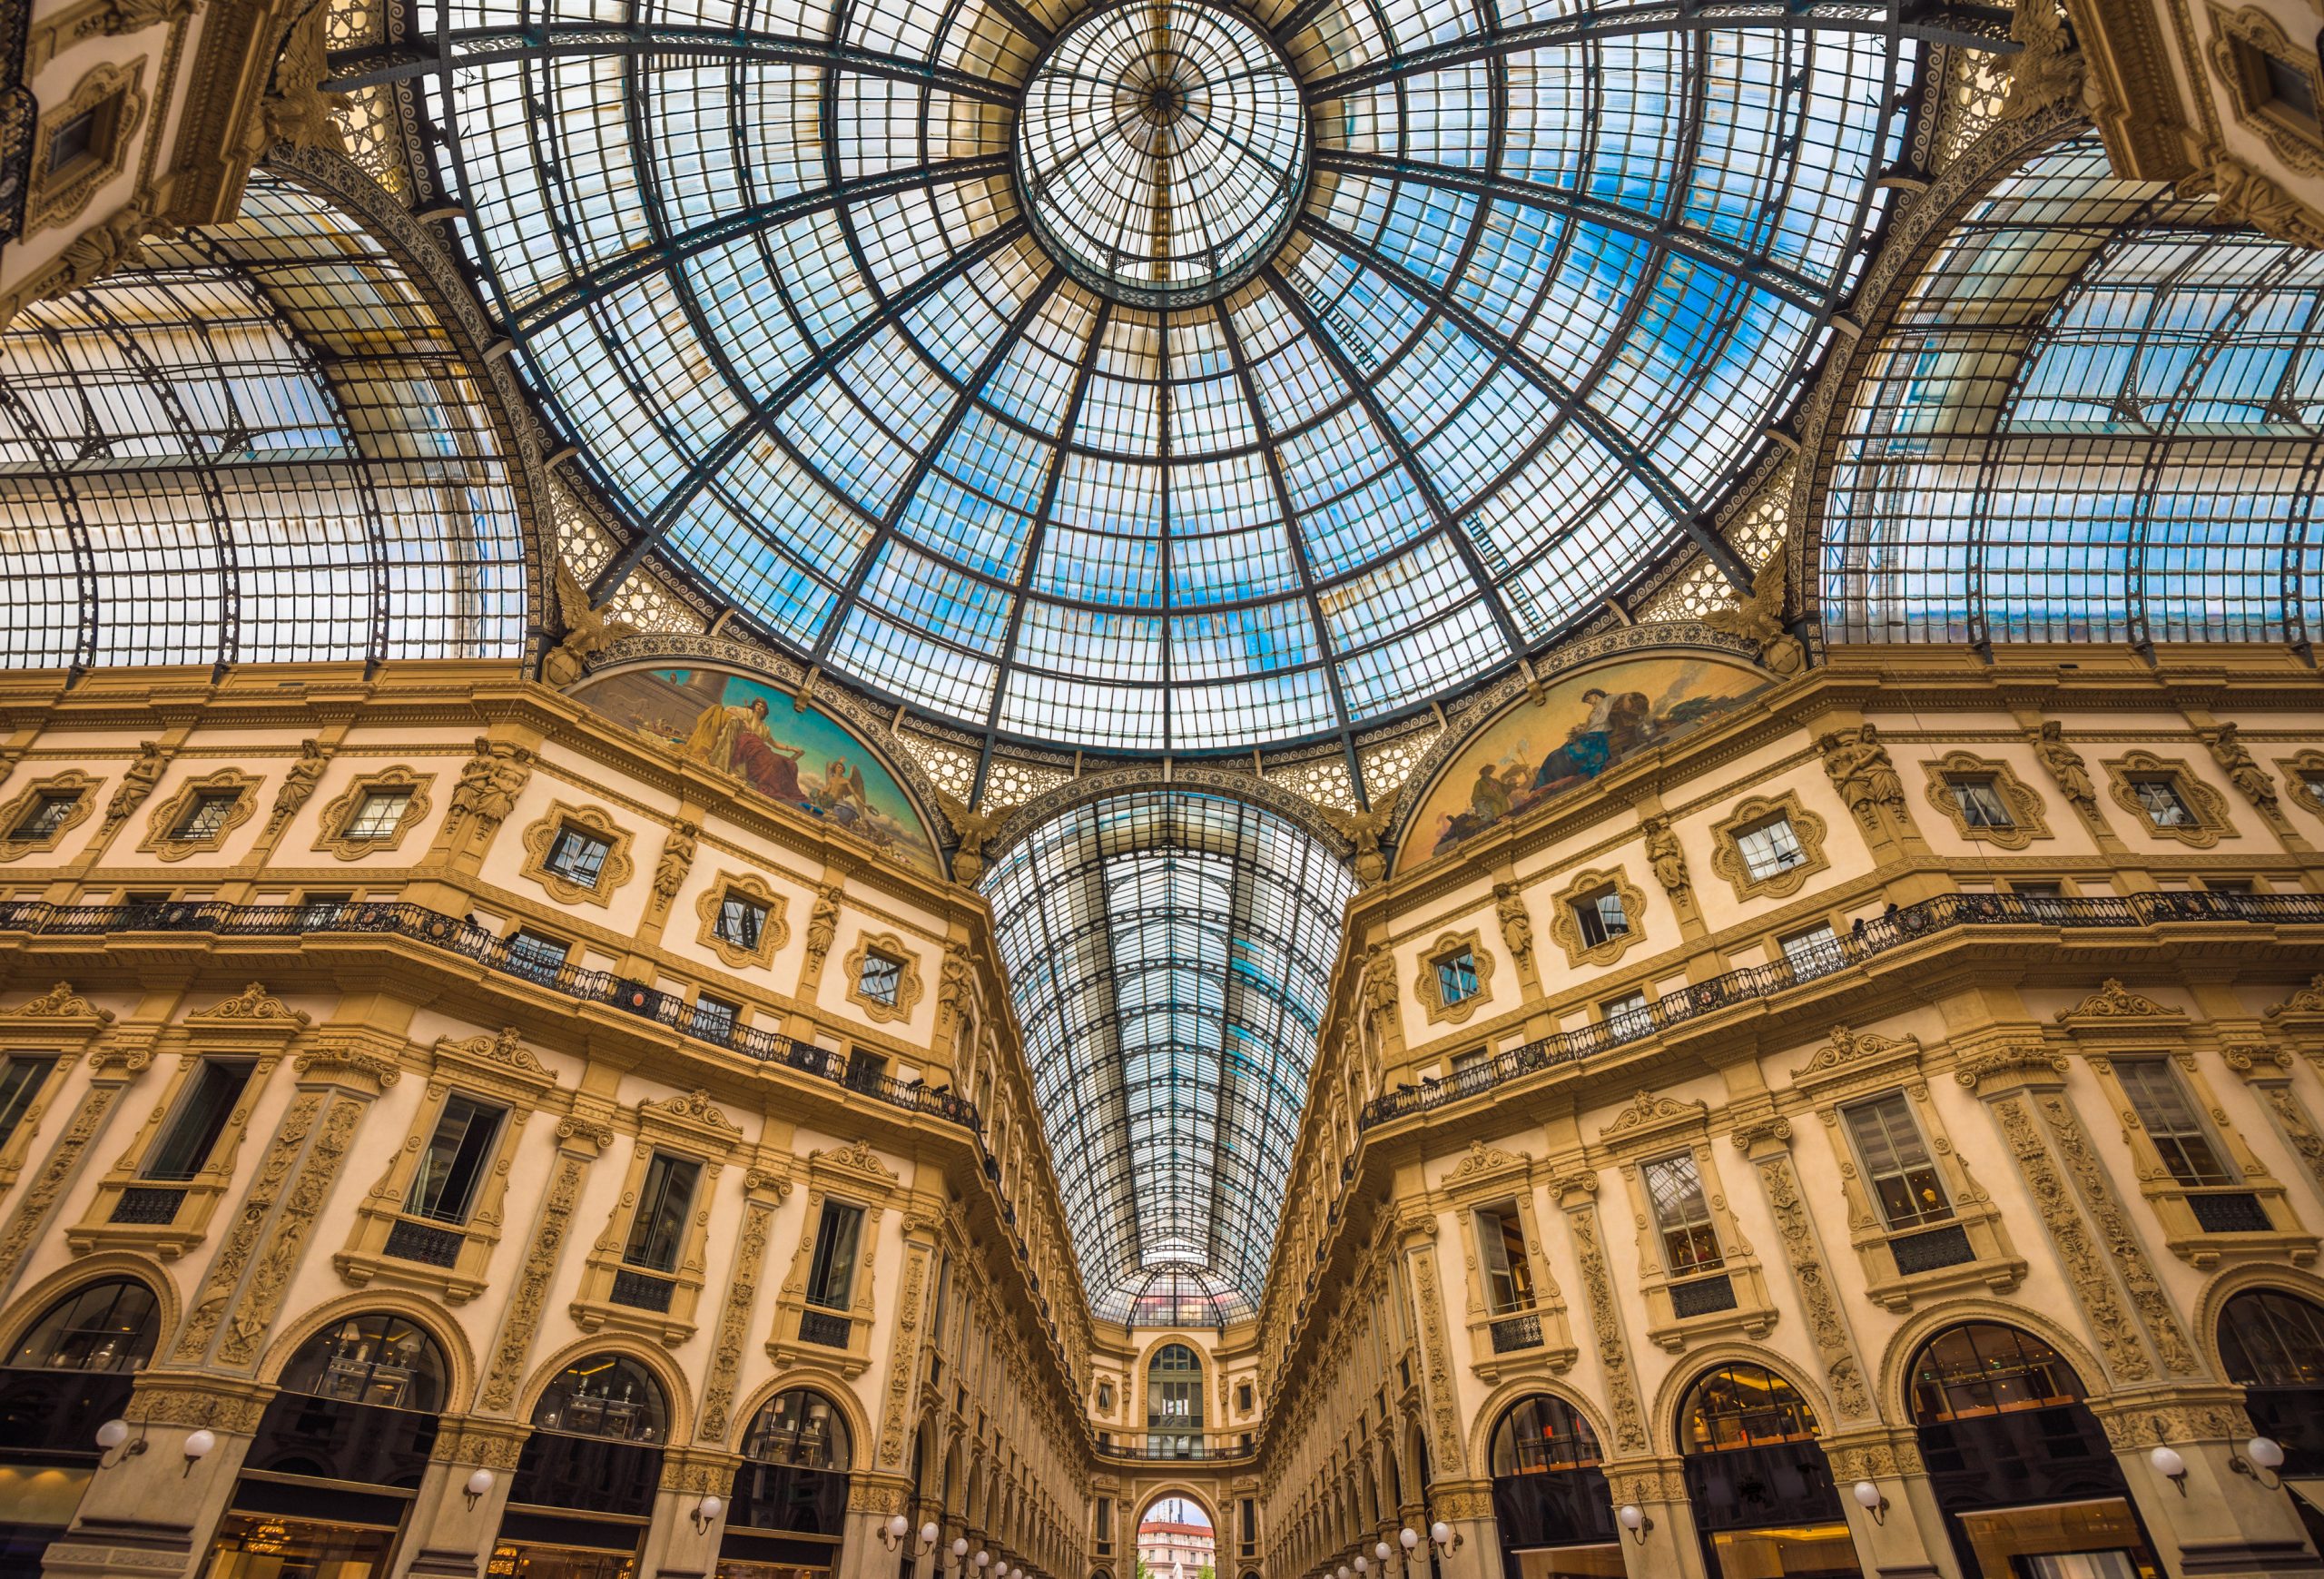 Galleria Vittorio Emanuele II shopping arcade, Milan, Italy